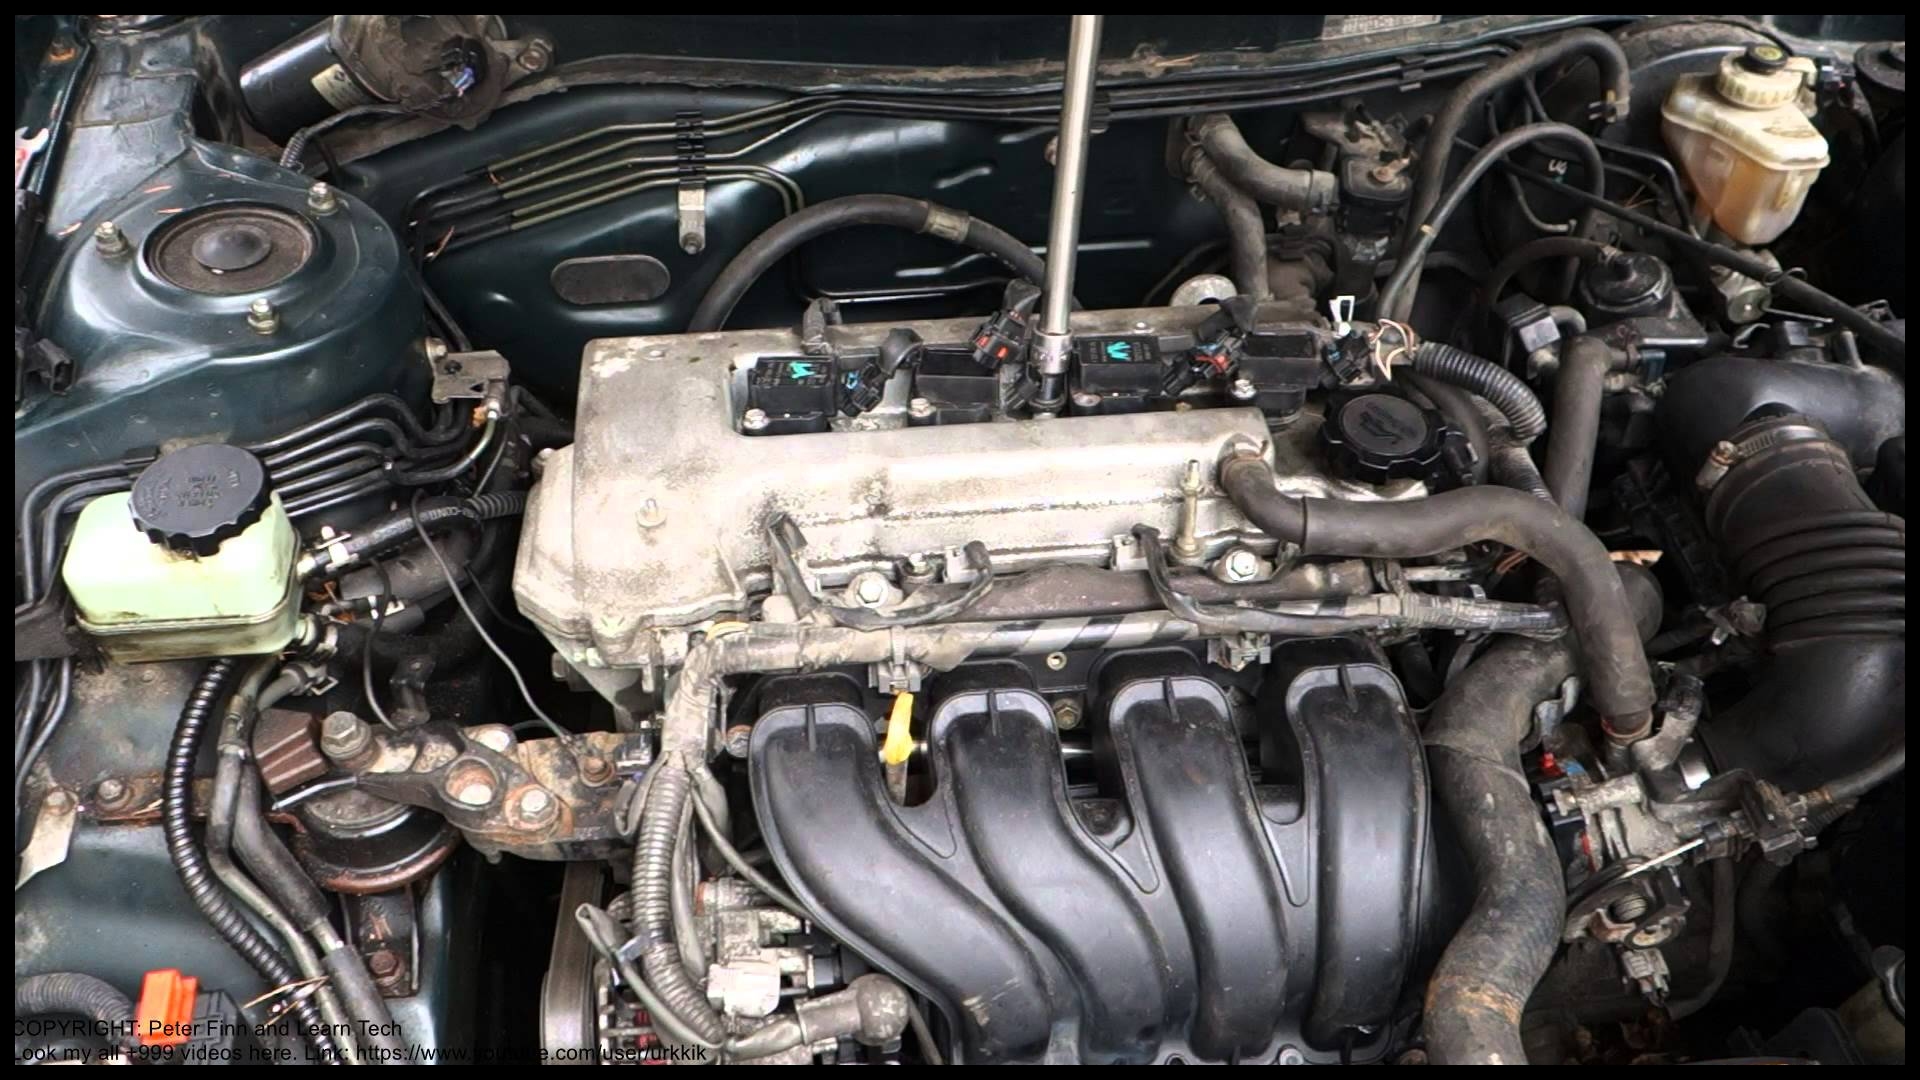 How to repair car engine error failure code P0303